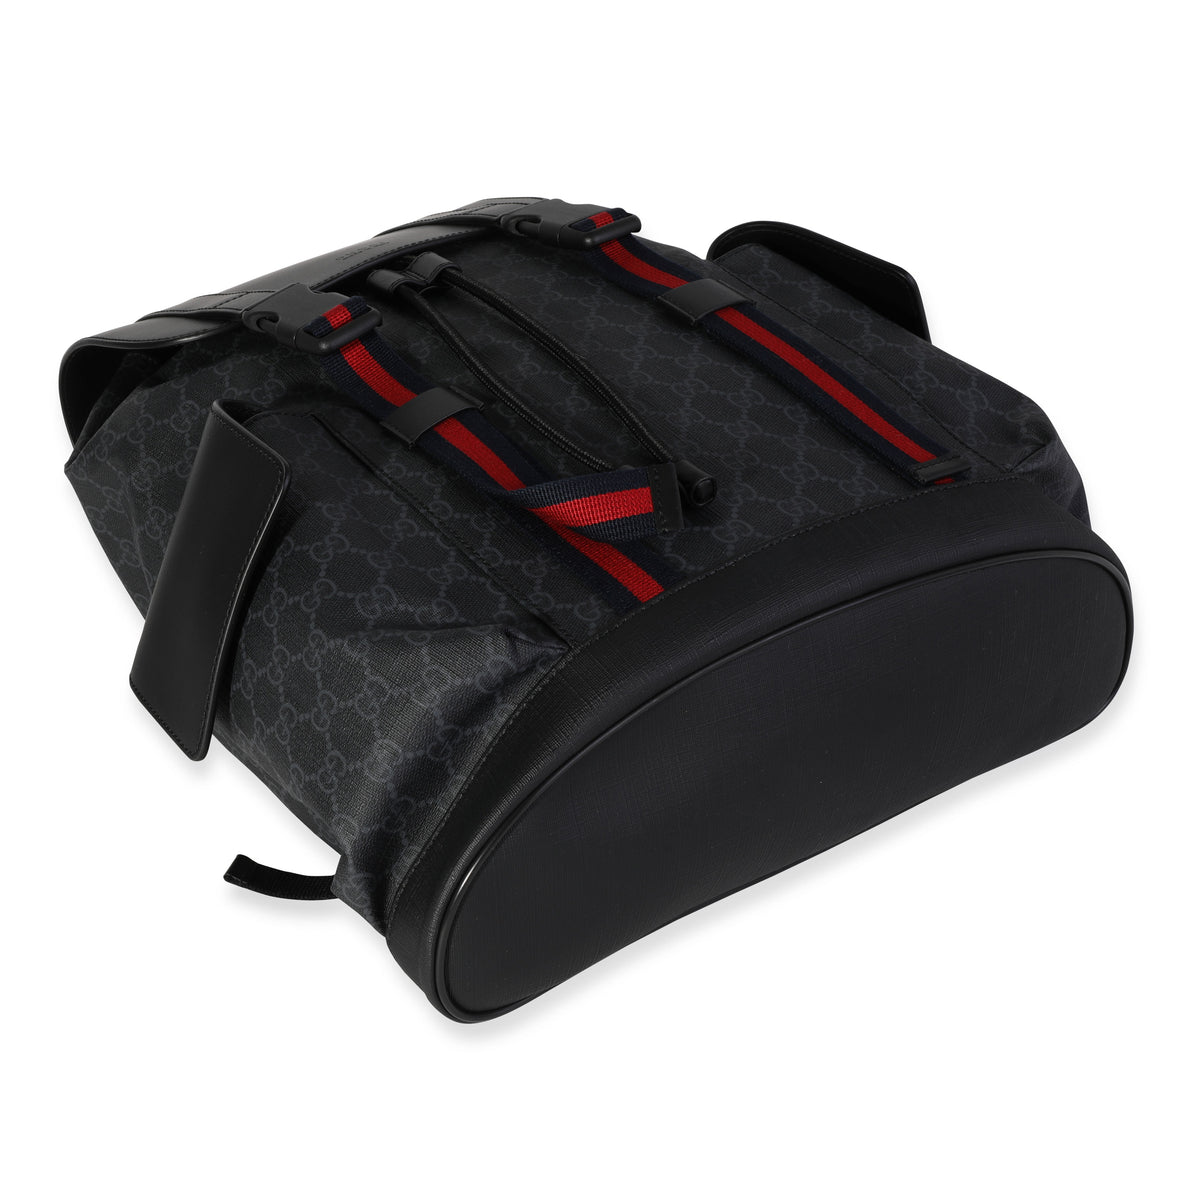 Gucci Black Soft Gg Supreme Backpack